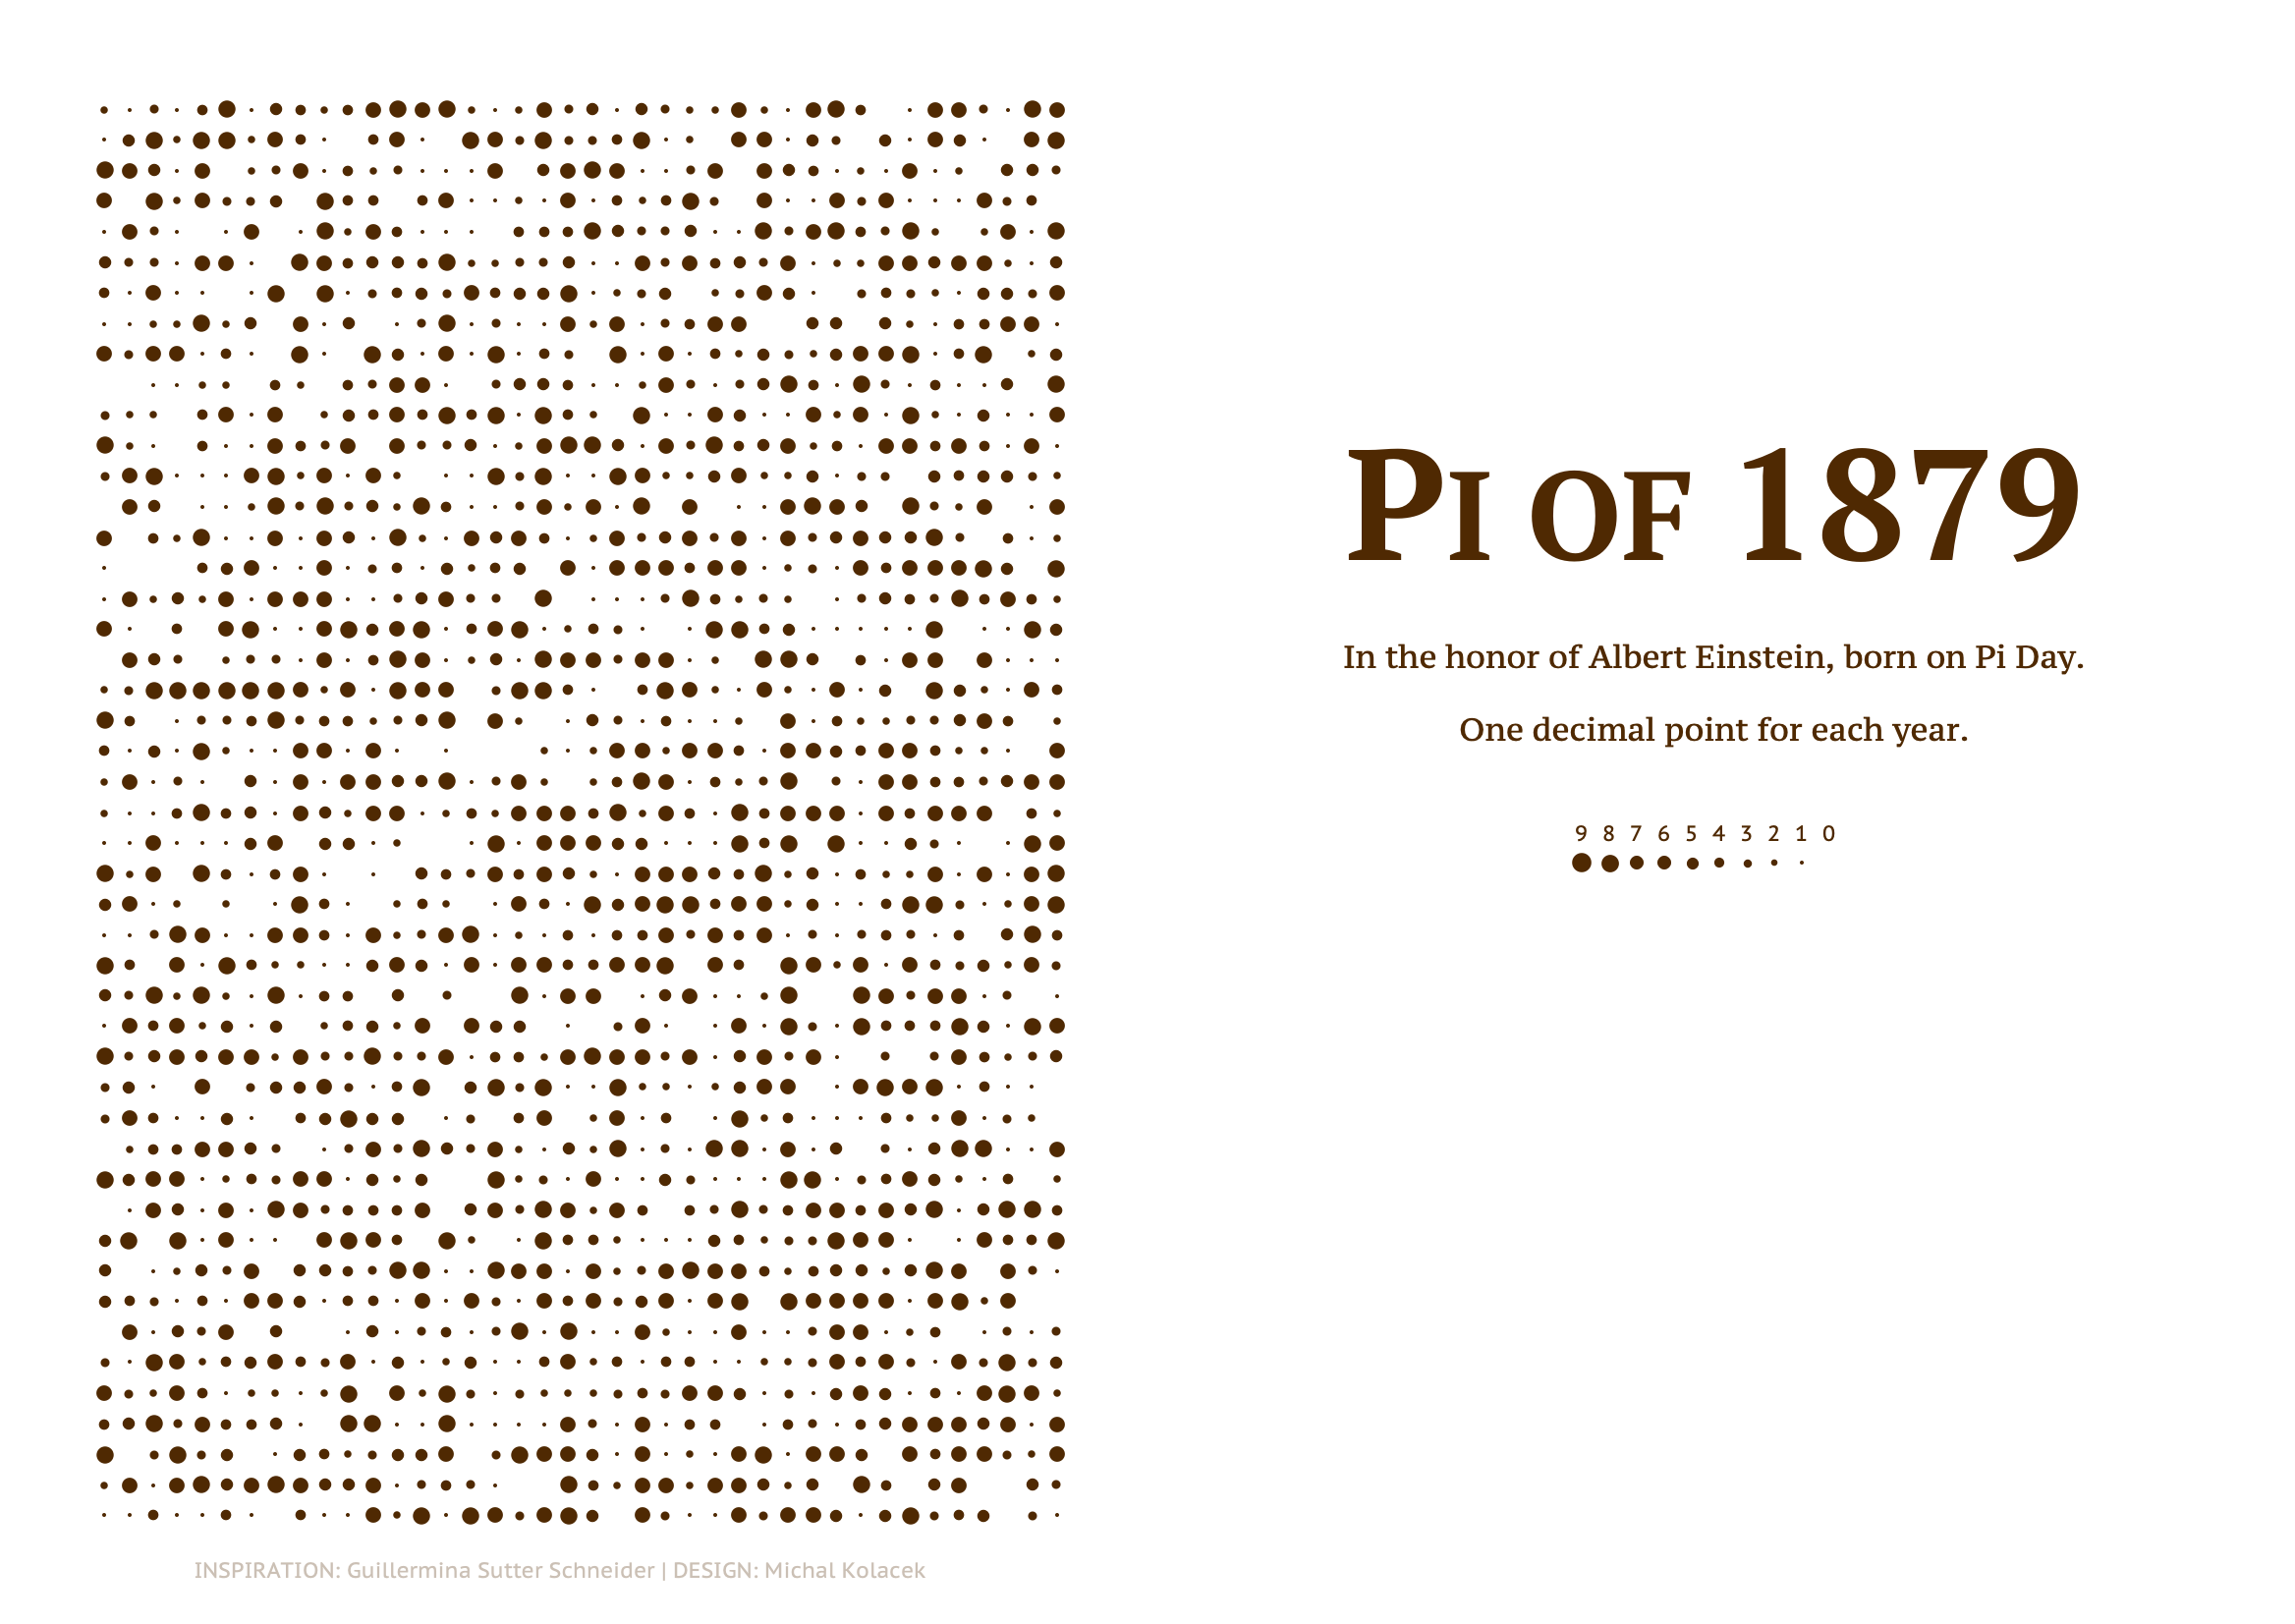 Pi of 1879